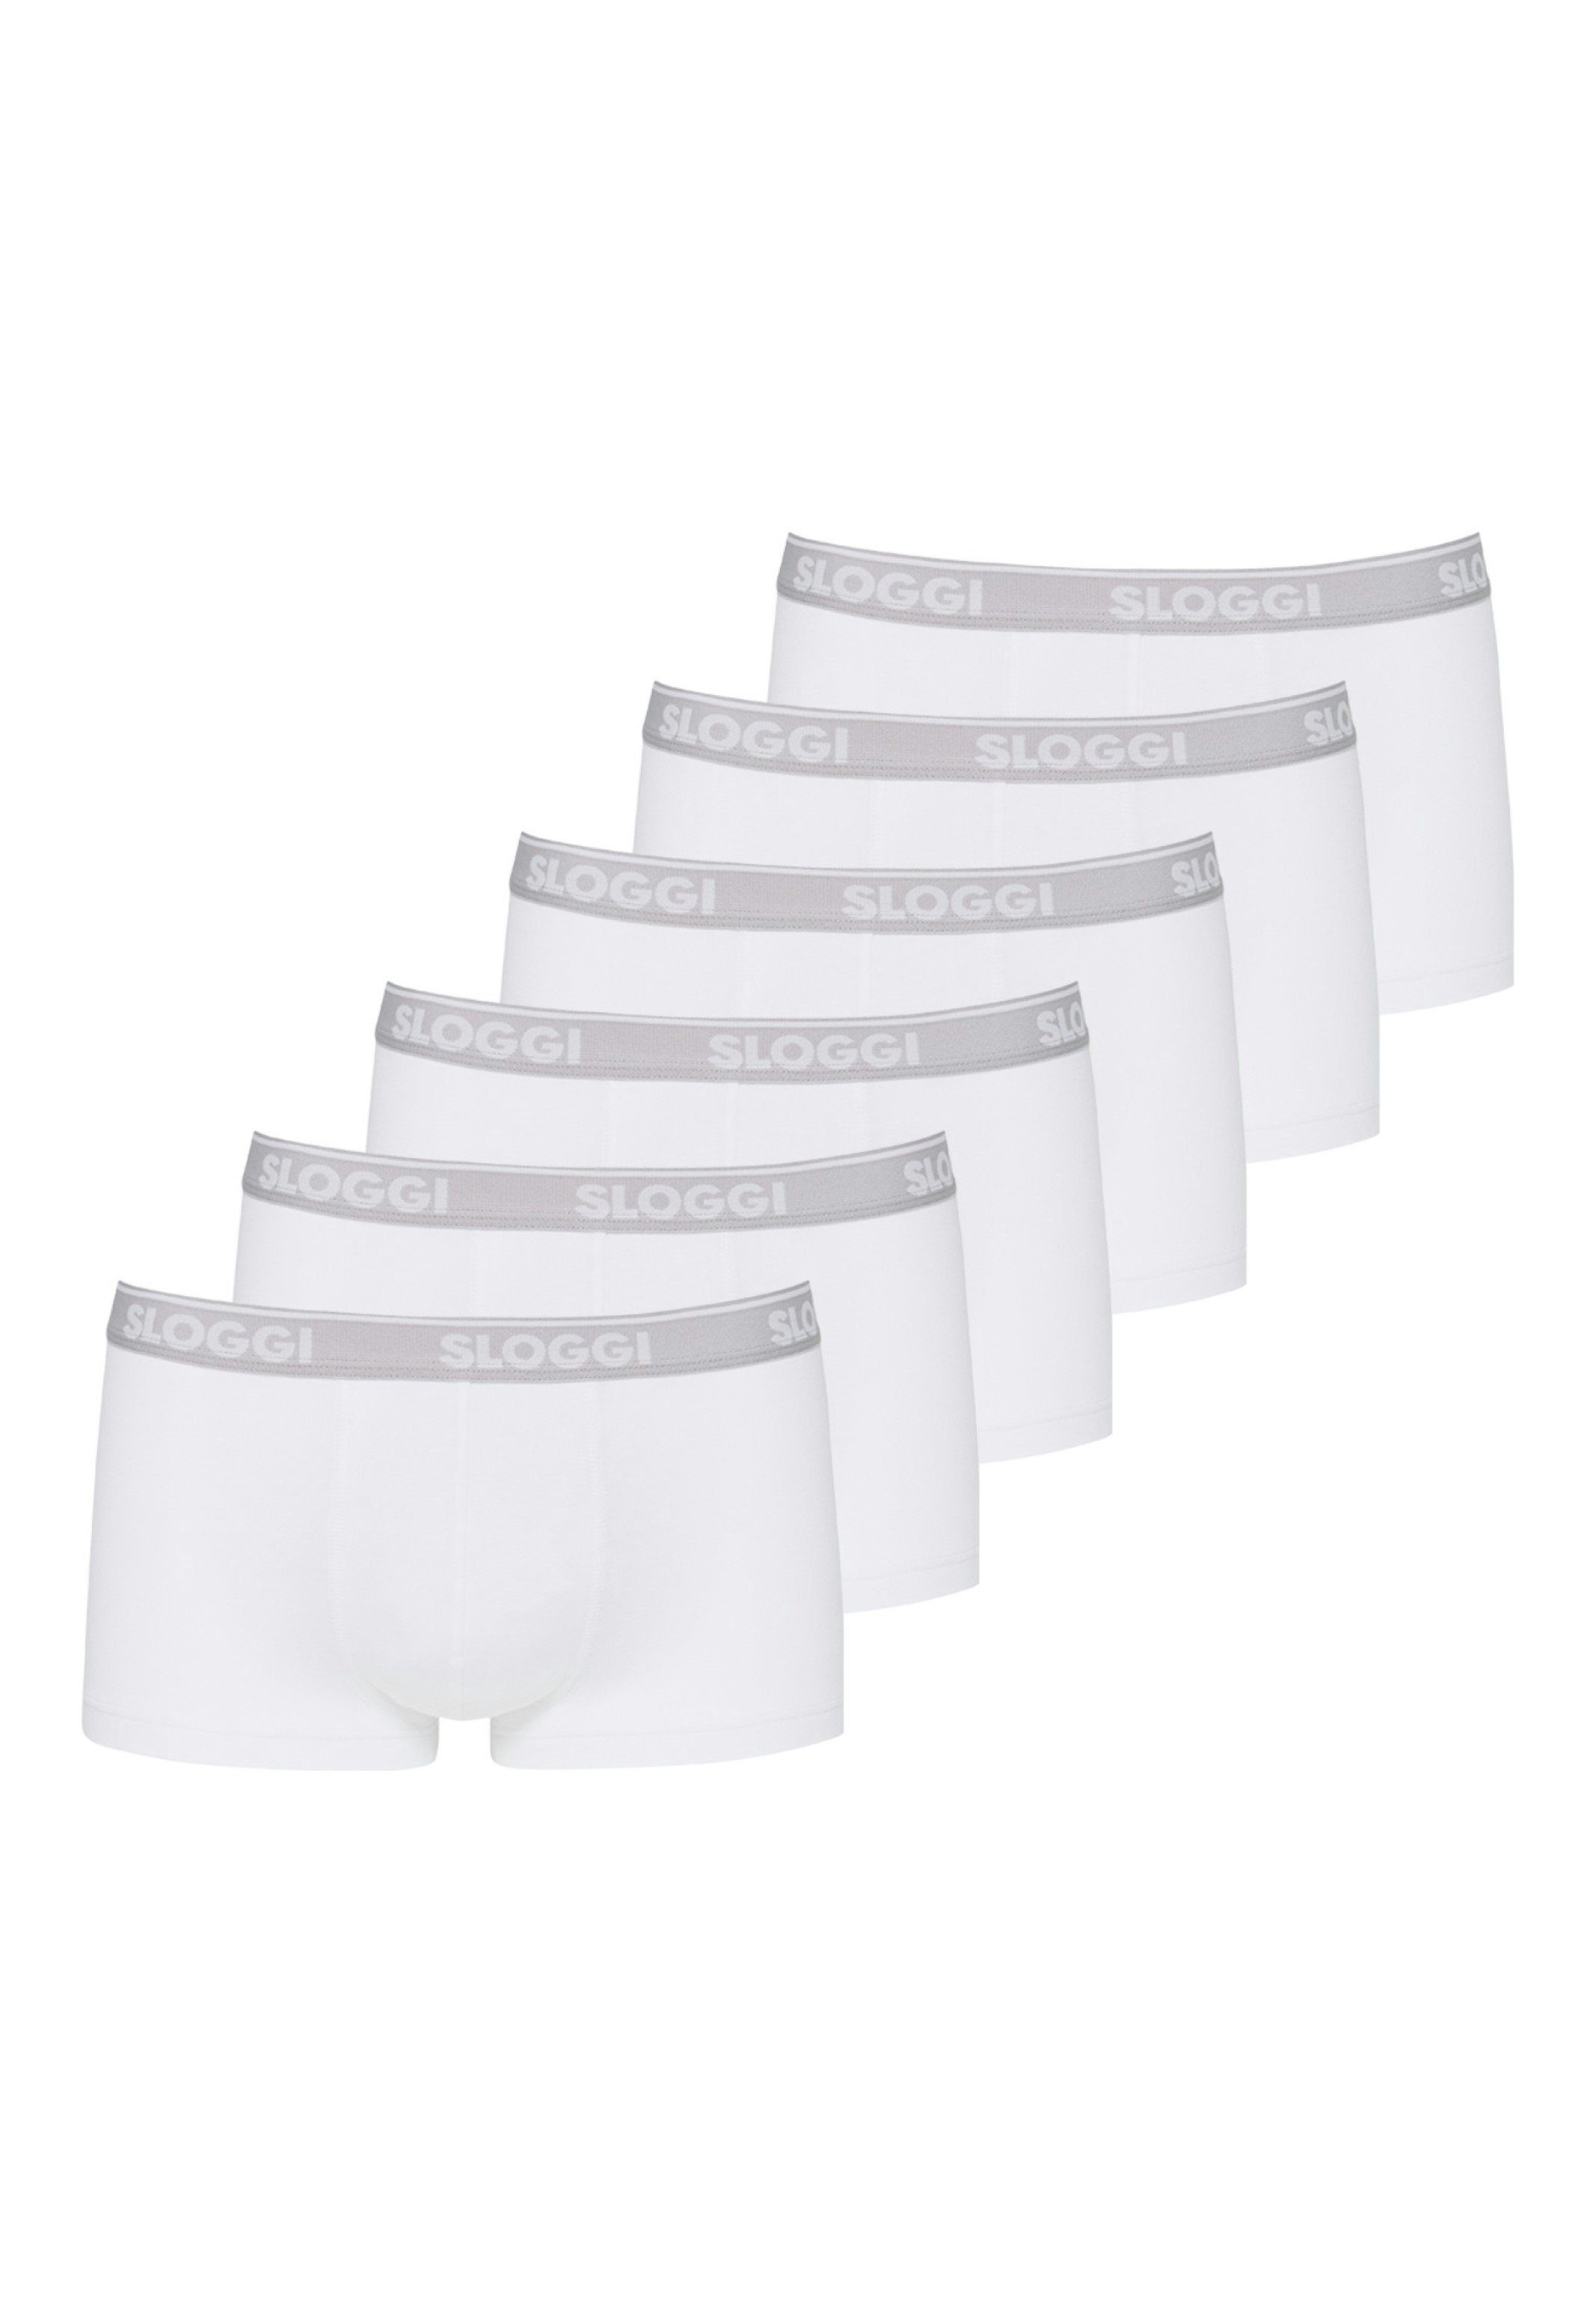 Sloggi Retro Boxer 6er Pack Go ABC (Spar-Set, 6-St) Hipster / Pant - Baumwolle - Ohne Eingriff - Perfekte Passform Weiß